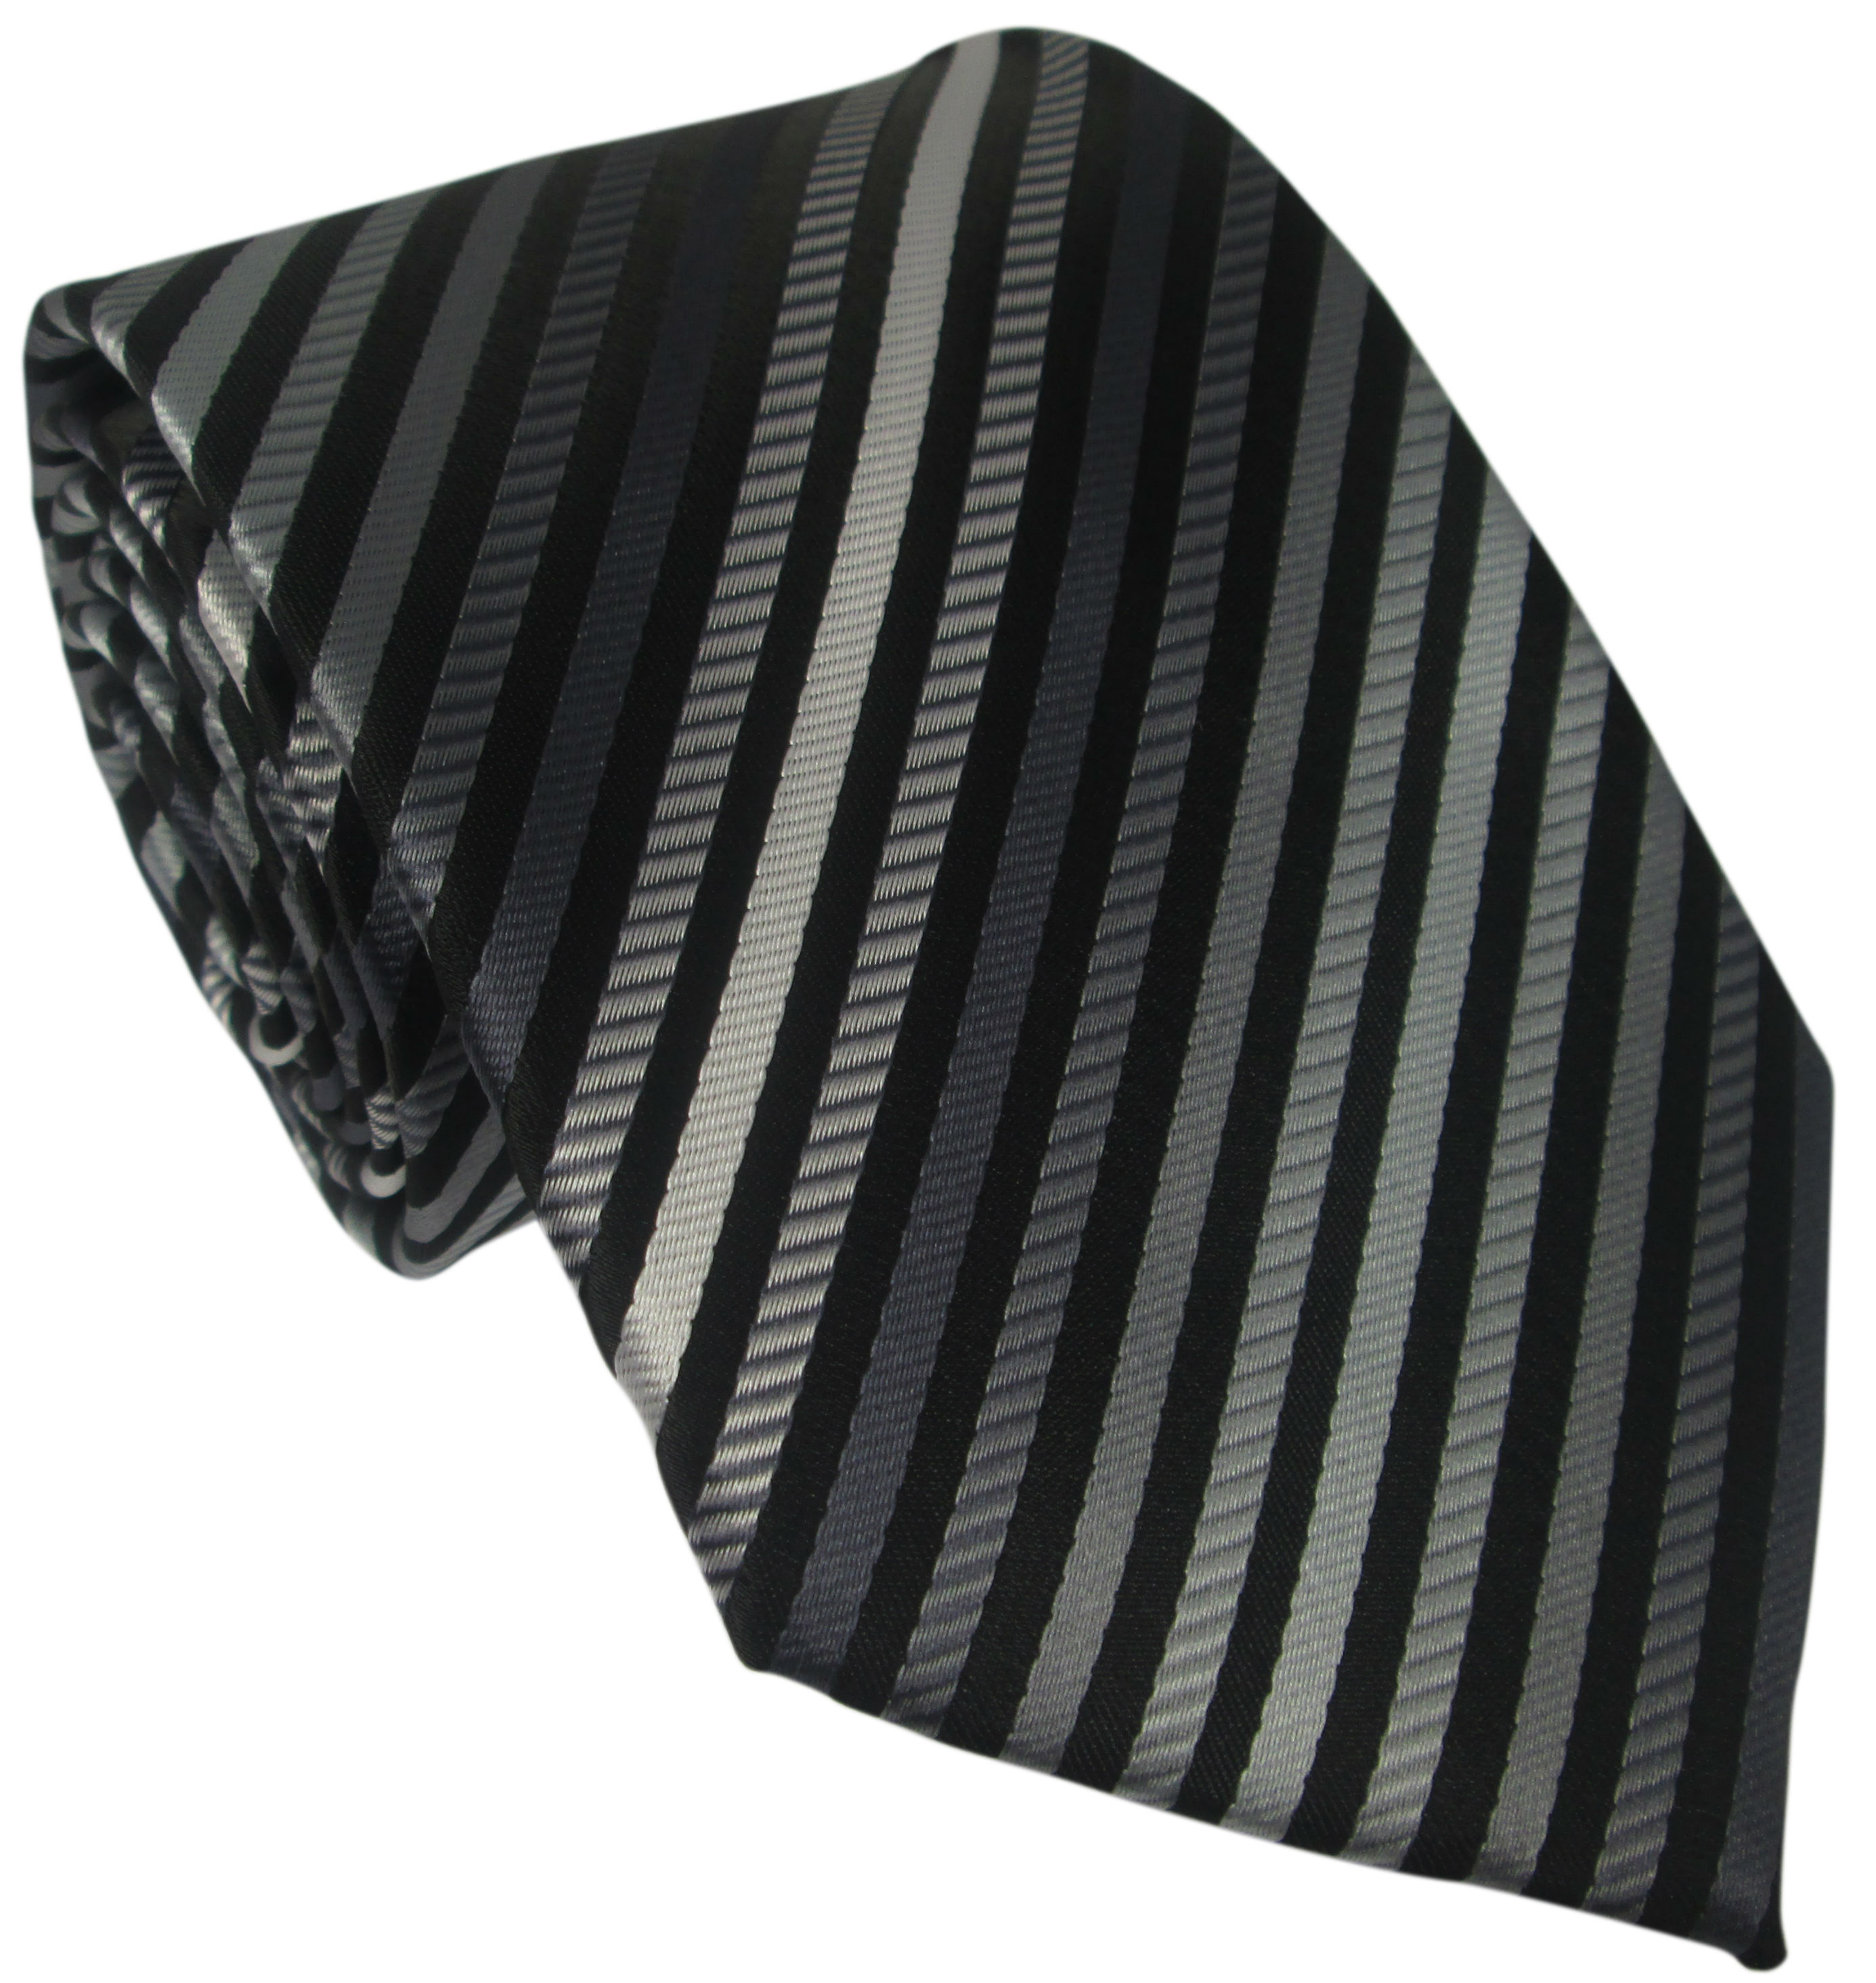 Black Grey and White Striped Silk Tie